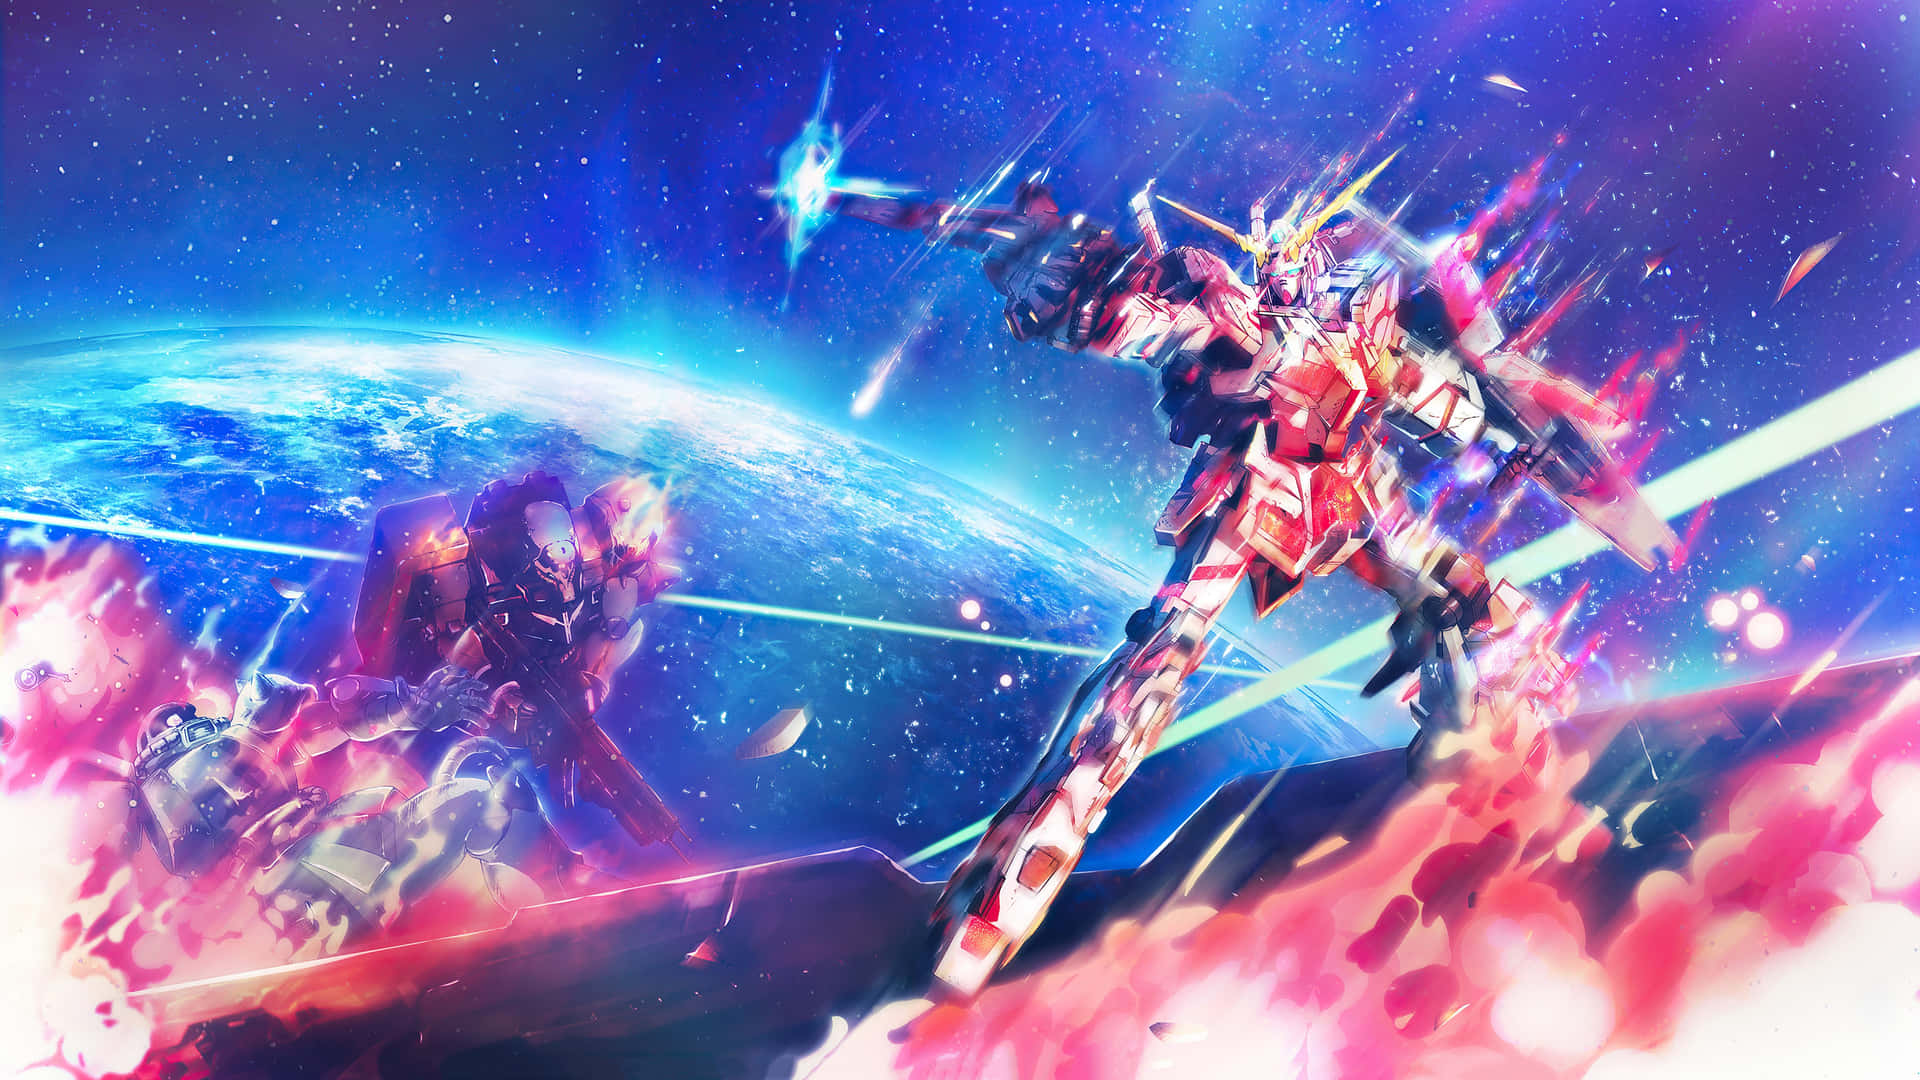 Oplev Mobile Suit Gundam i ultra HD 4K. Wallpaper